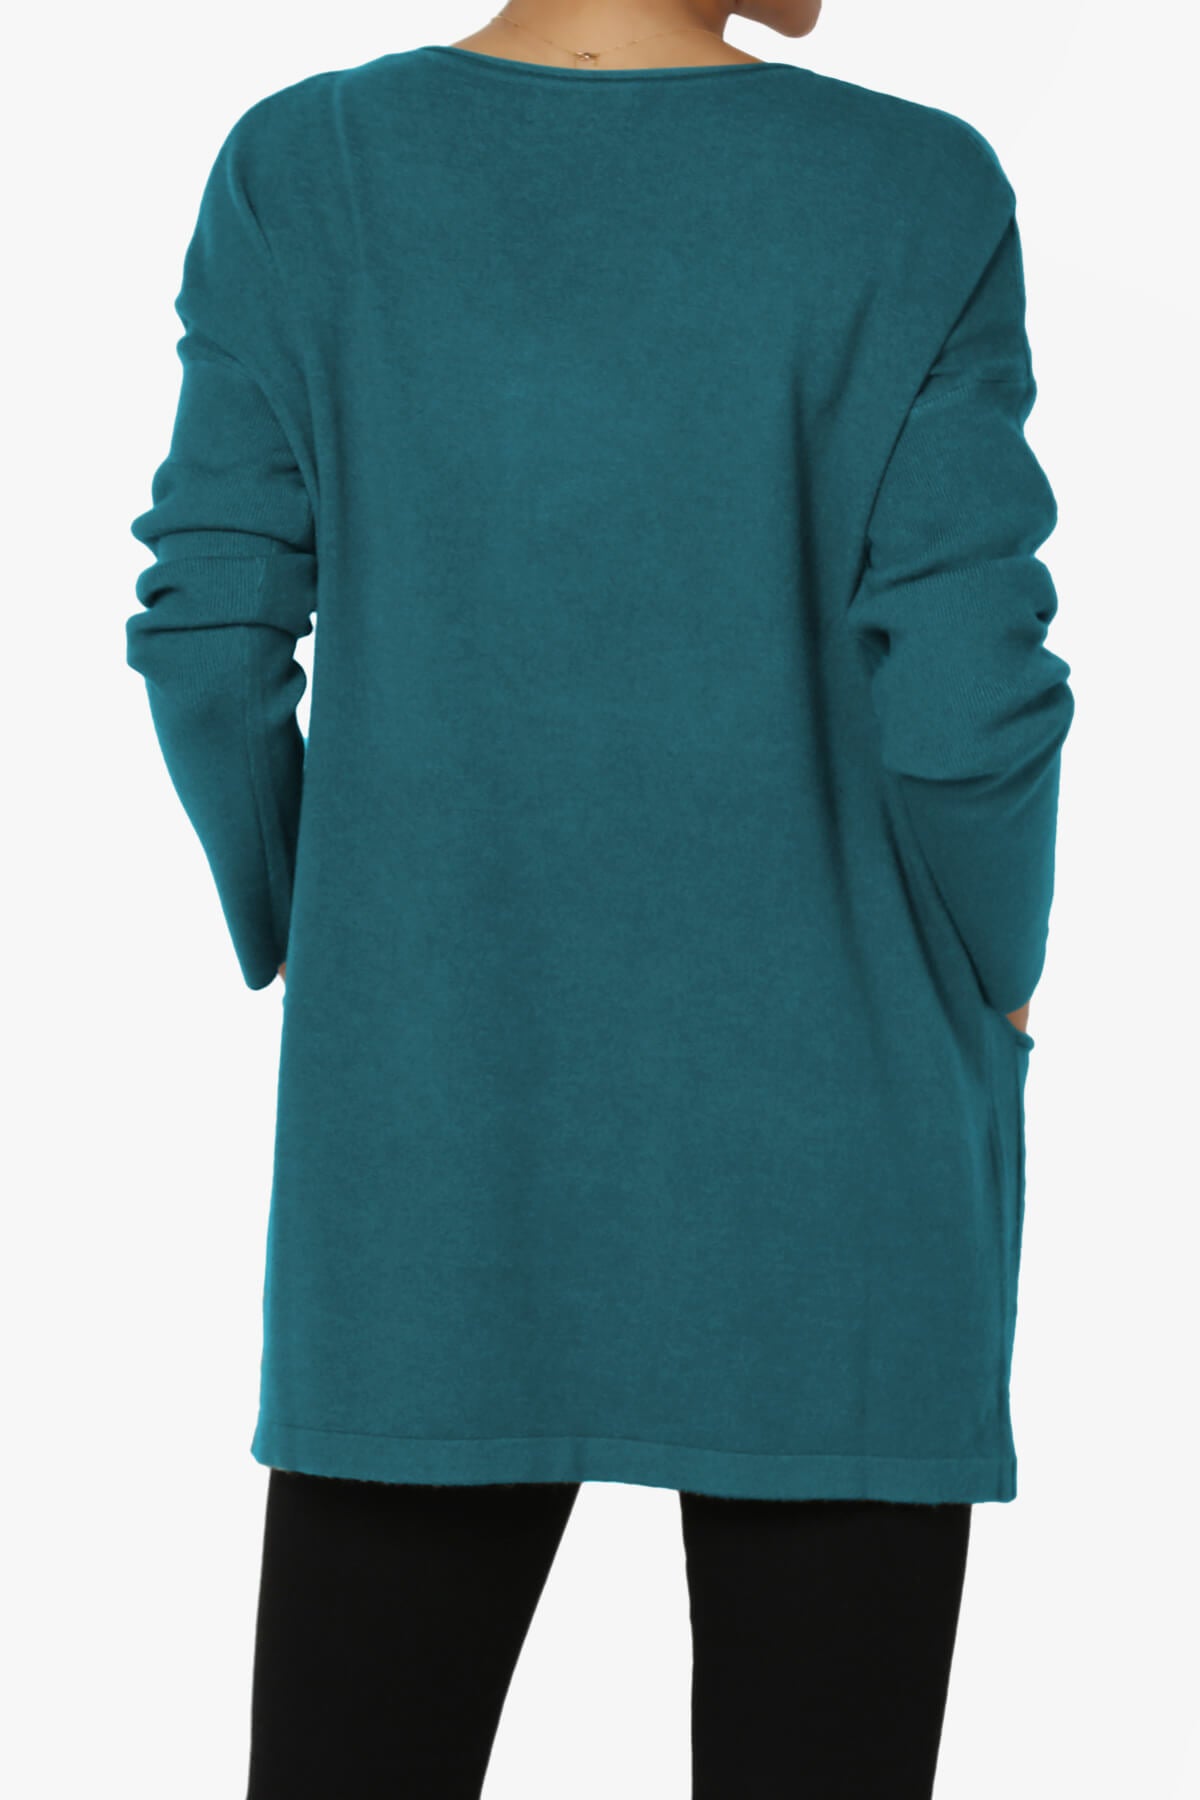 Brecken Pocket Long Sleeve Soft Knit Sweater Tunic OCEAN TEAL_2